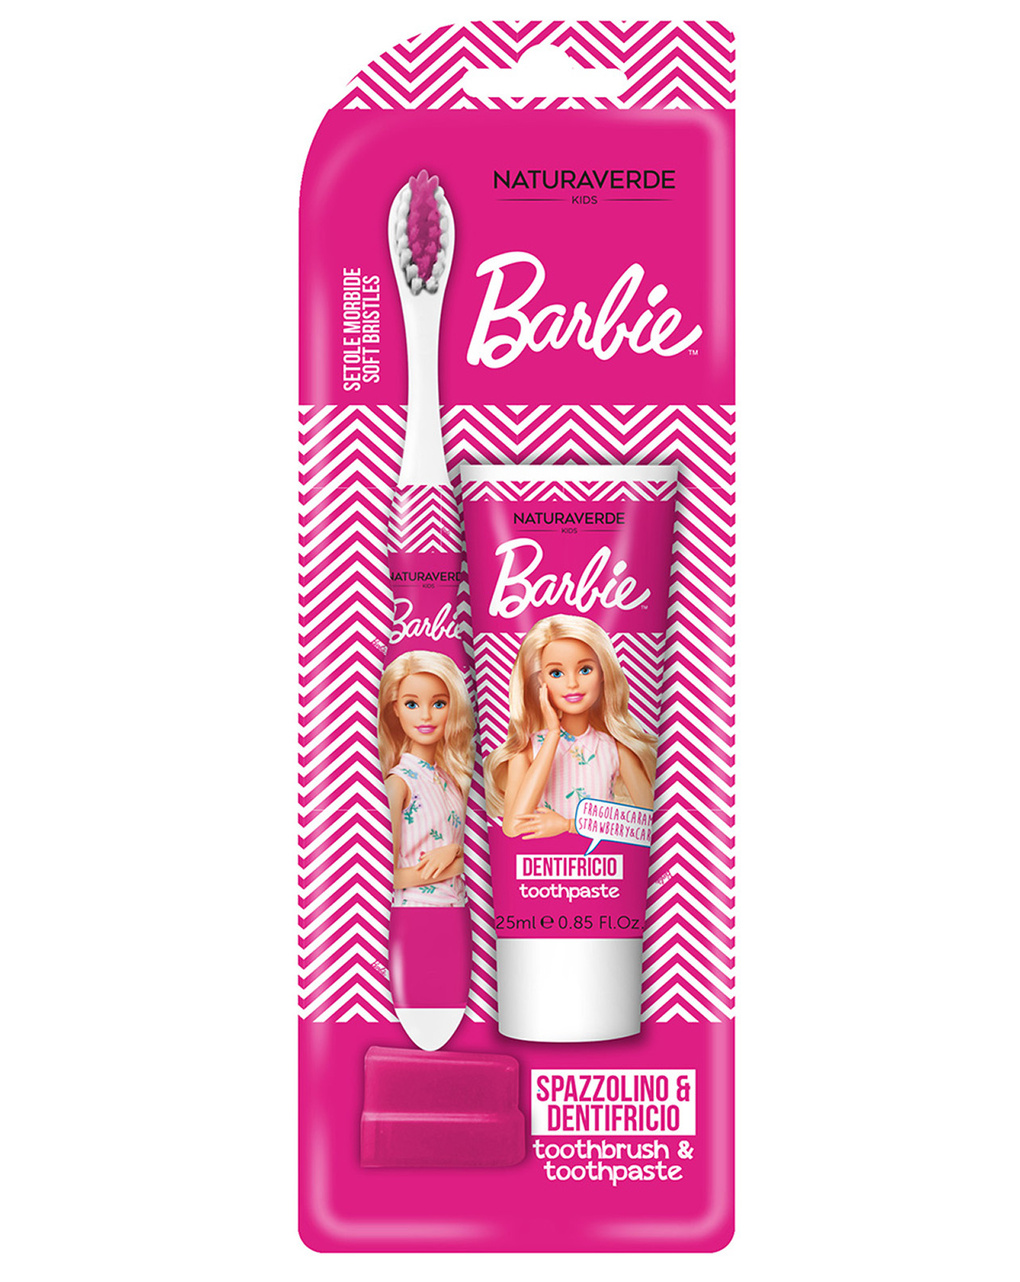 Kit oral care barbie (dentifricio 25ml + spazzolino) - naturaverde - NaturaVerde